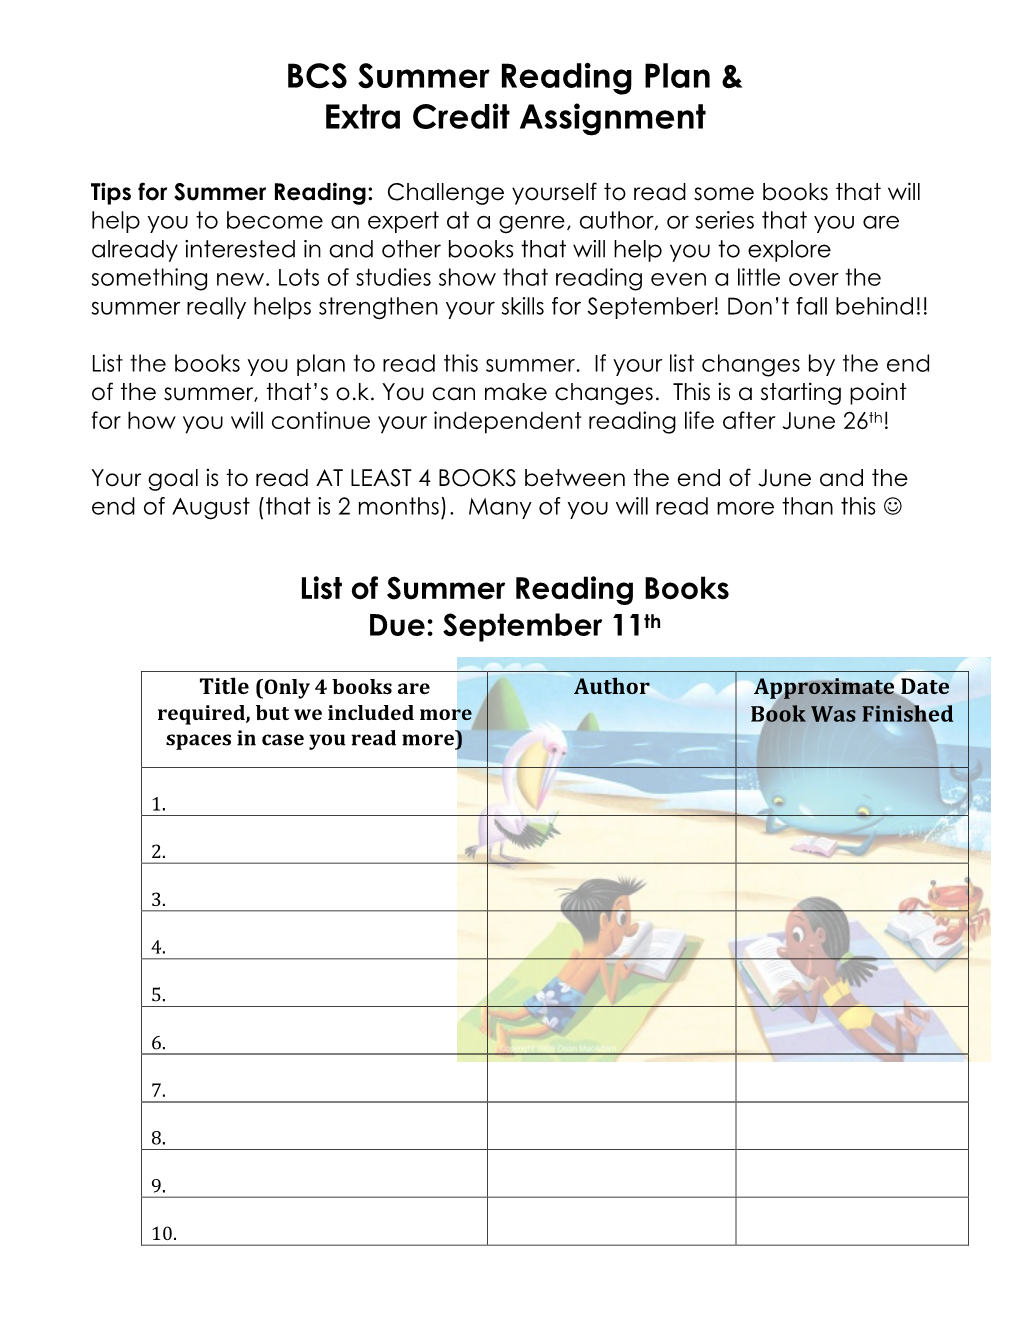 BCS Summer Reading Plan & Extra Credit Assignment